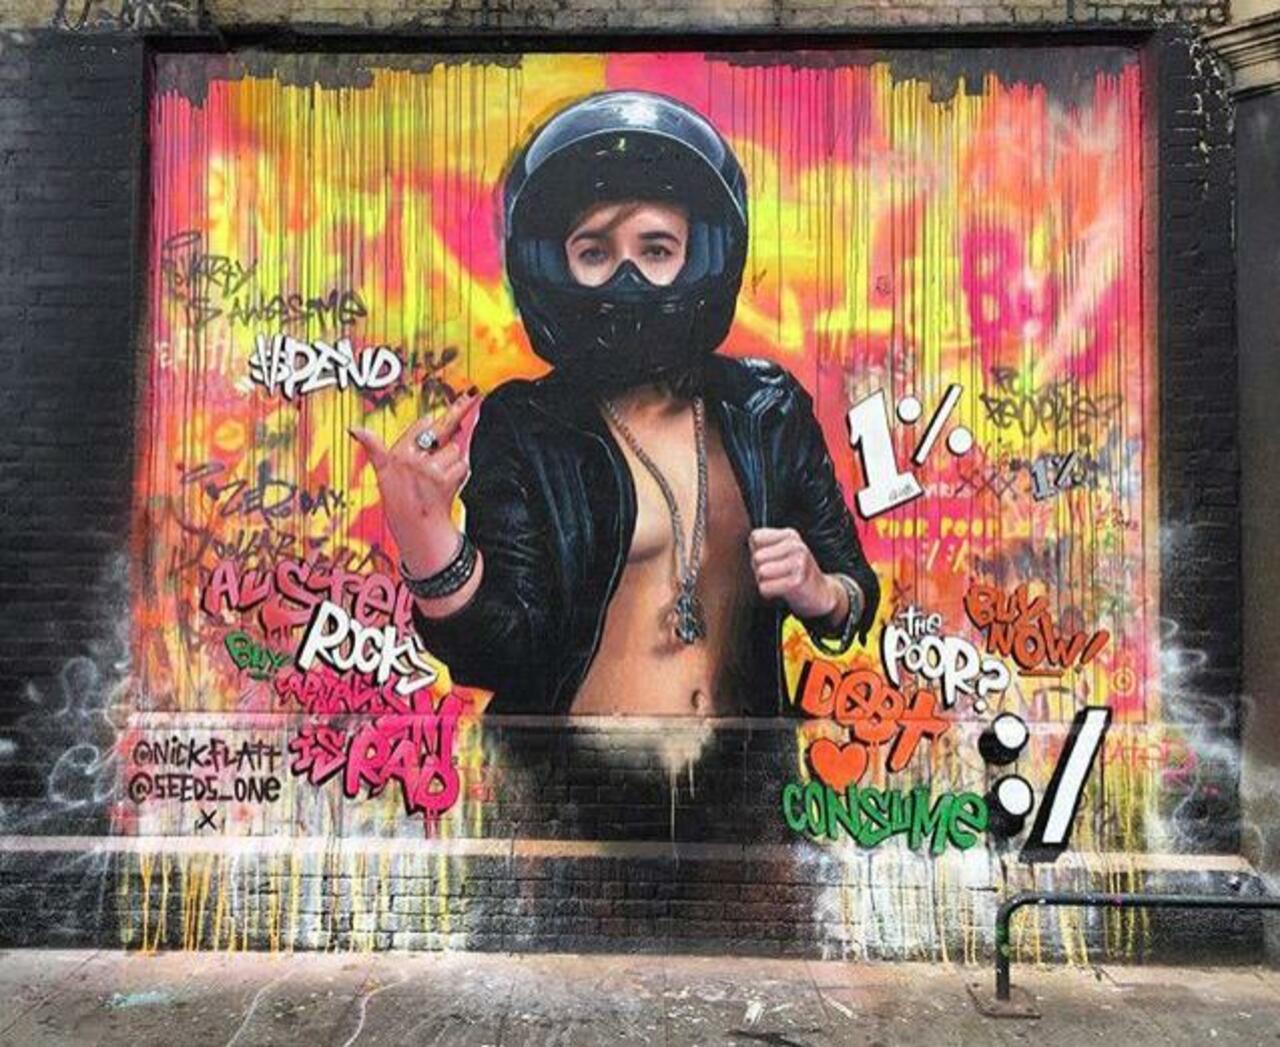 New Street Art collab by Nick Flatt &  Seeds One in London 

#art #graffiti #mural #streetart http://t.co/7oEycZ5OzB